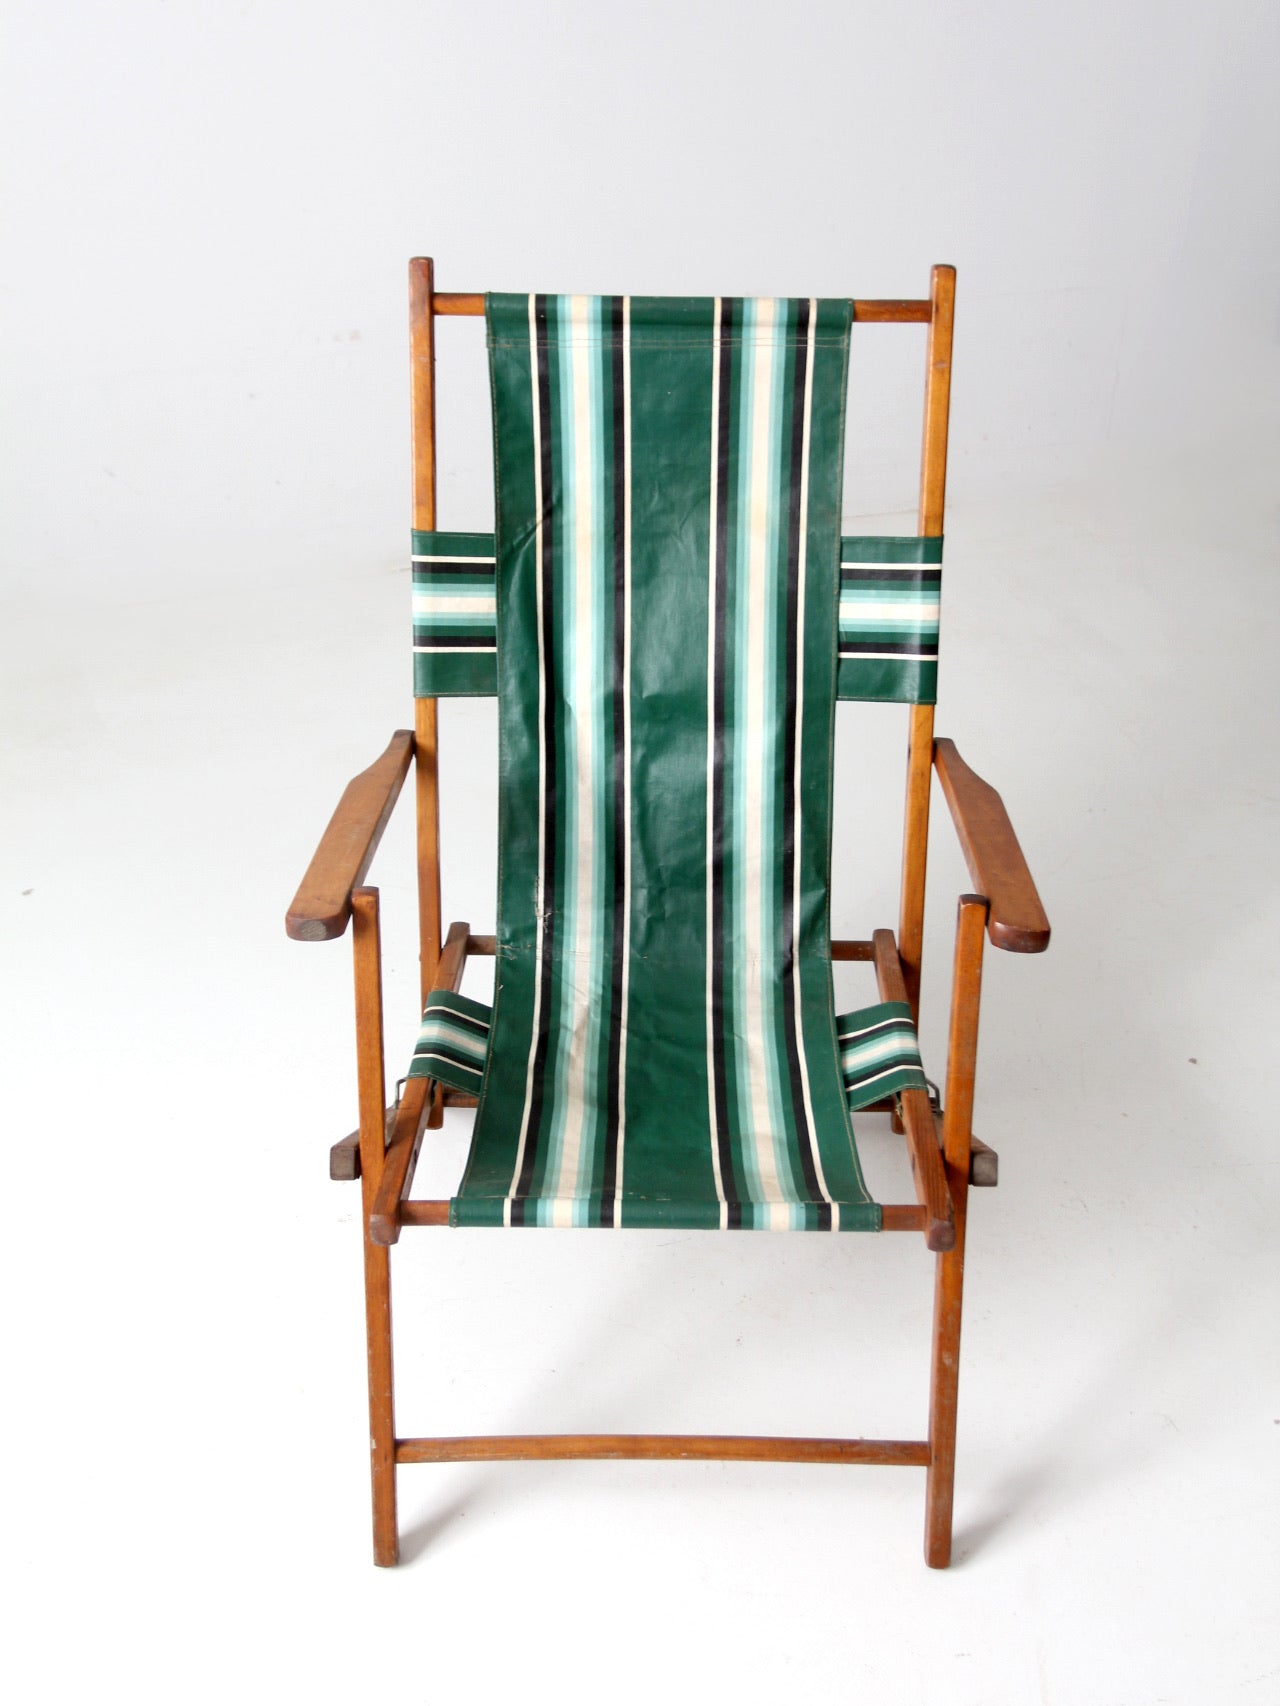 mid-century deck chair